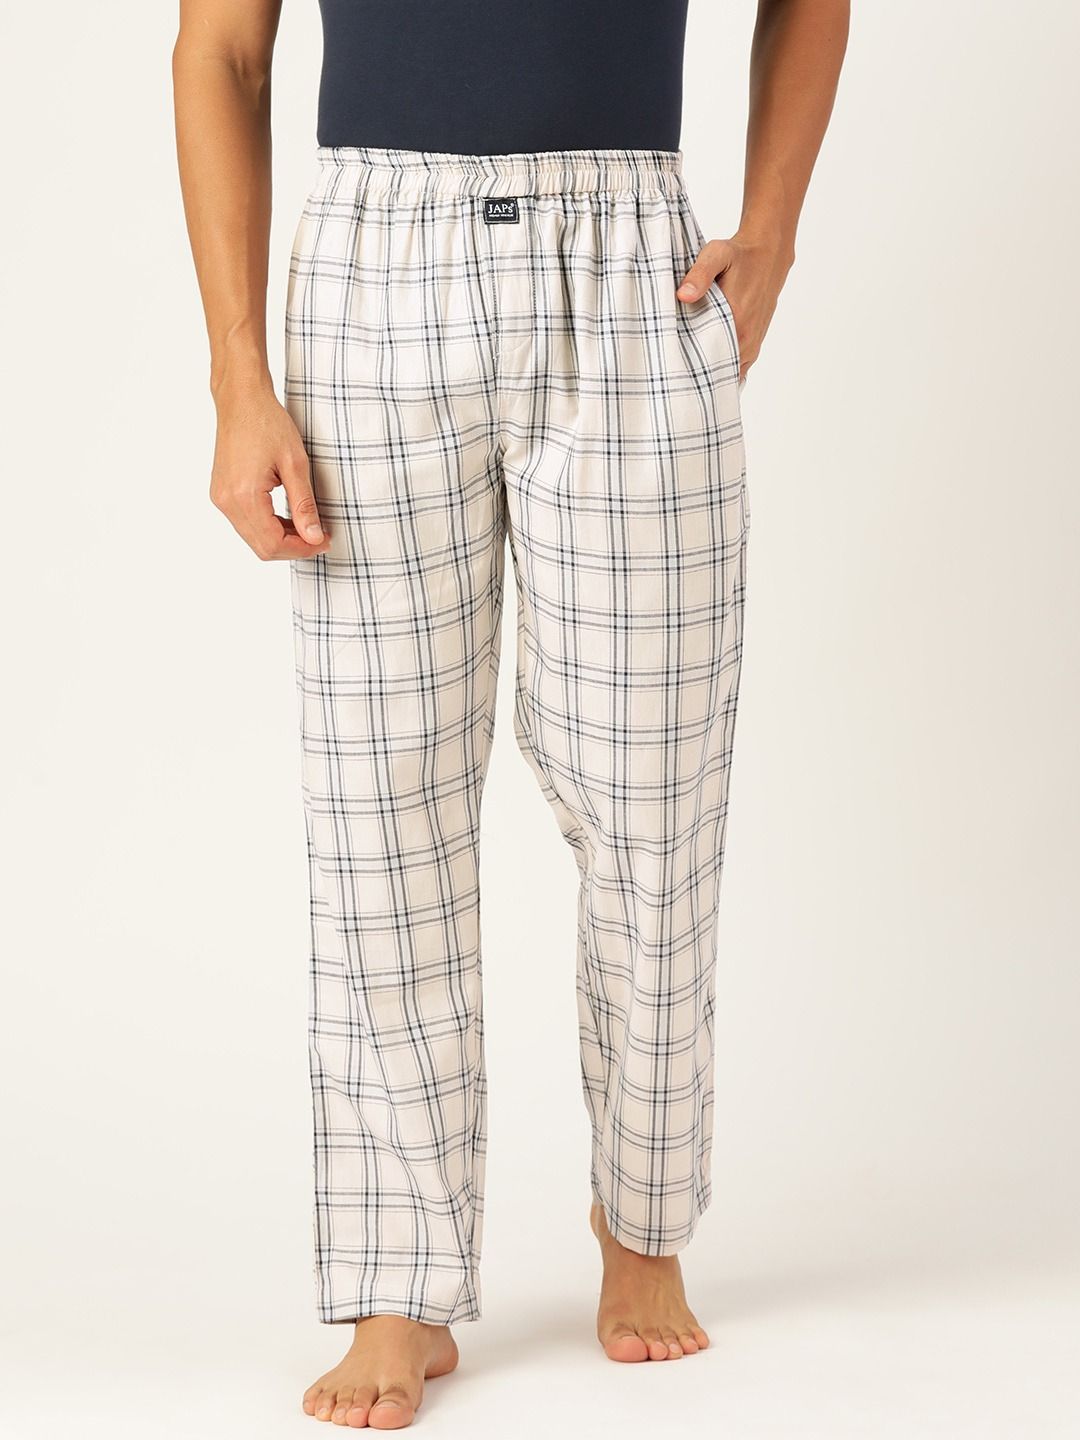 Andrew Scott Men's Cotton Super Soft Flannel Plaid Pajama Pants- 2 Pack at  Amazon Men's Clothing store